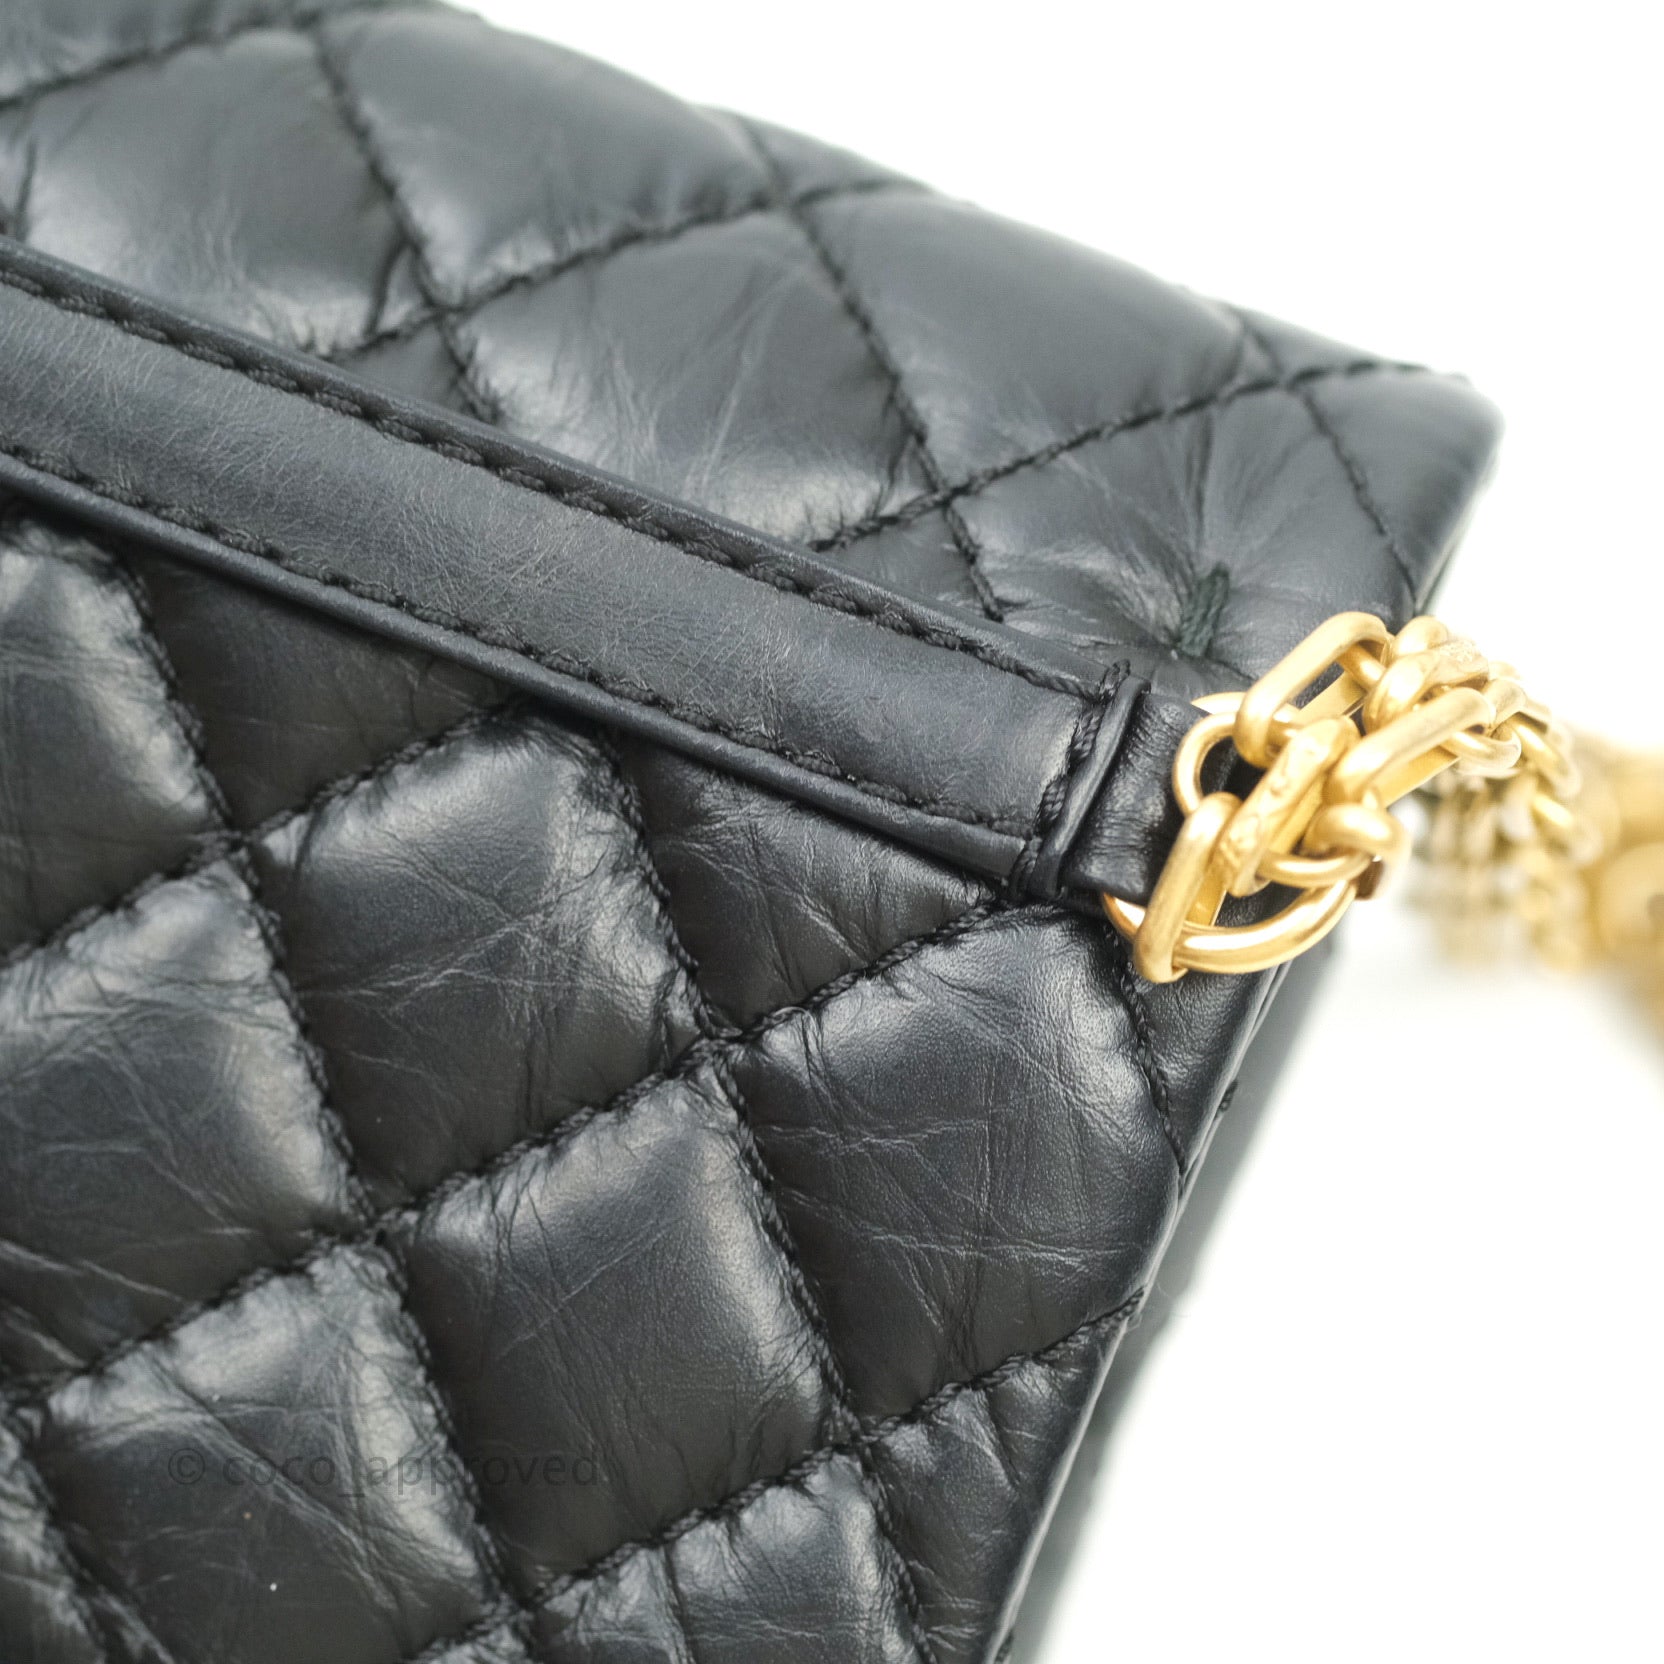 Chanel Medium Black Distressed Part-Quilted Calfskin Accordion